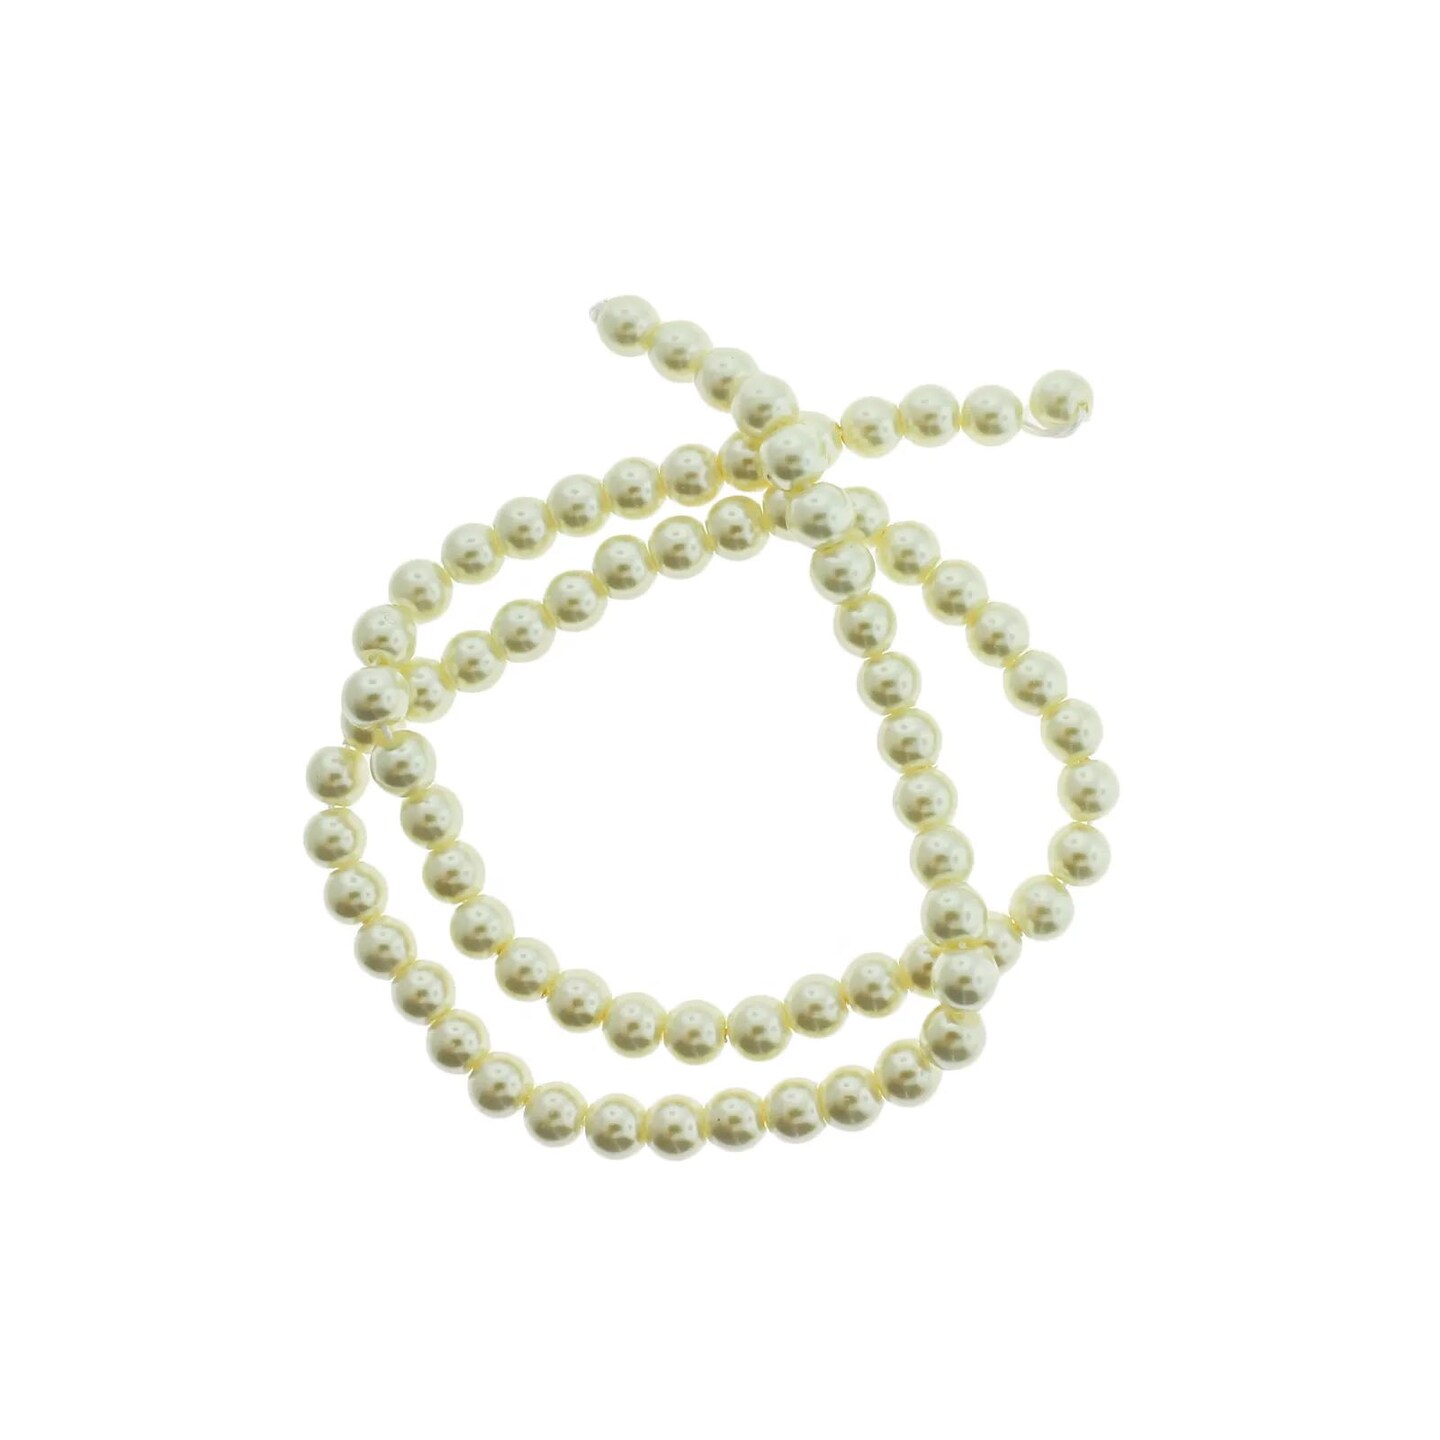 Kitcheniva Pearl White Round Glass Beads